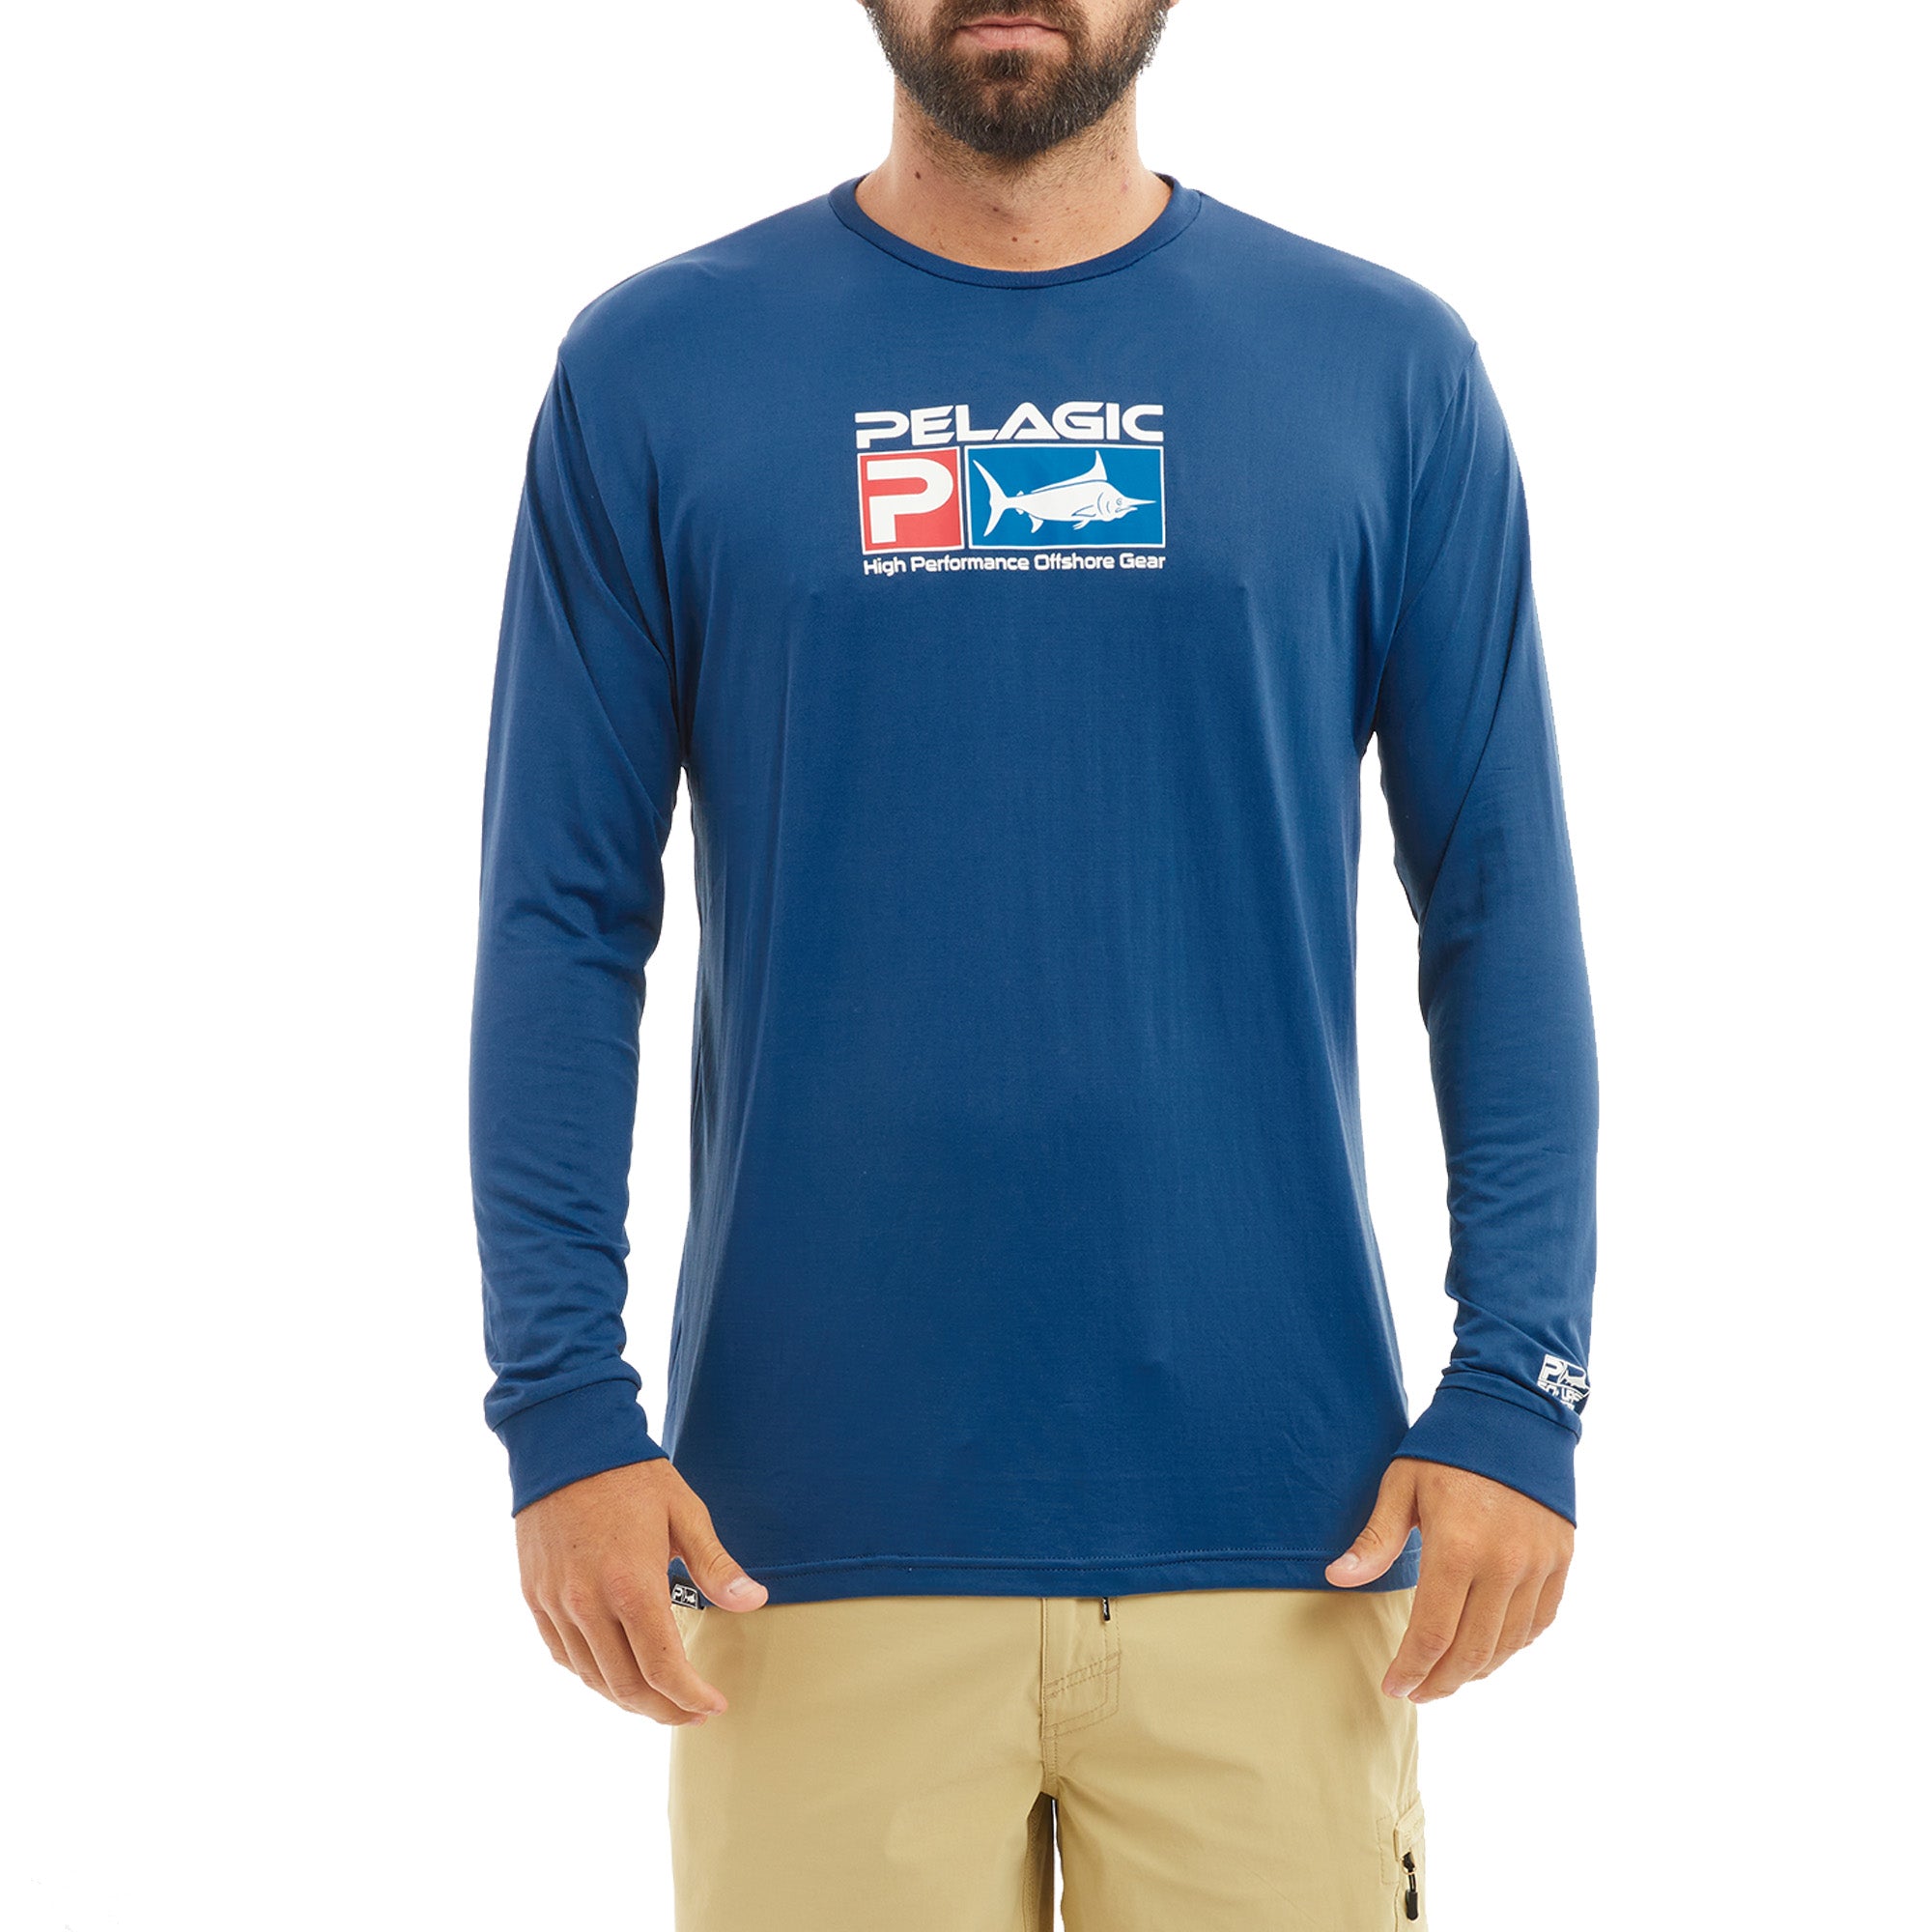 Performance Fishing Shirt Long Sleeve UPF 50+ (OFFSHORE Lure), L